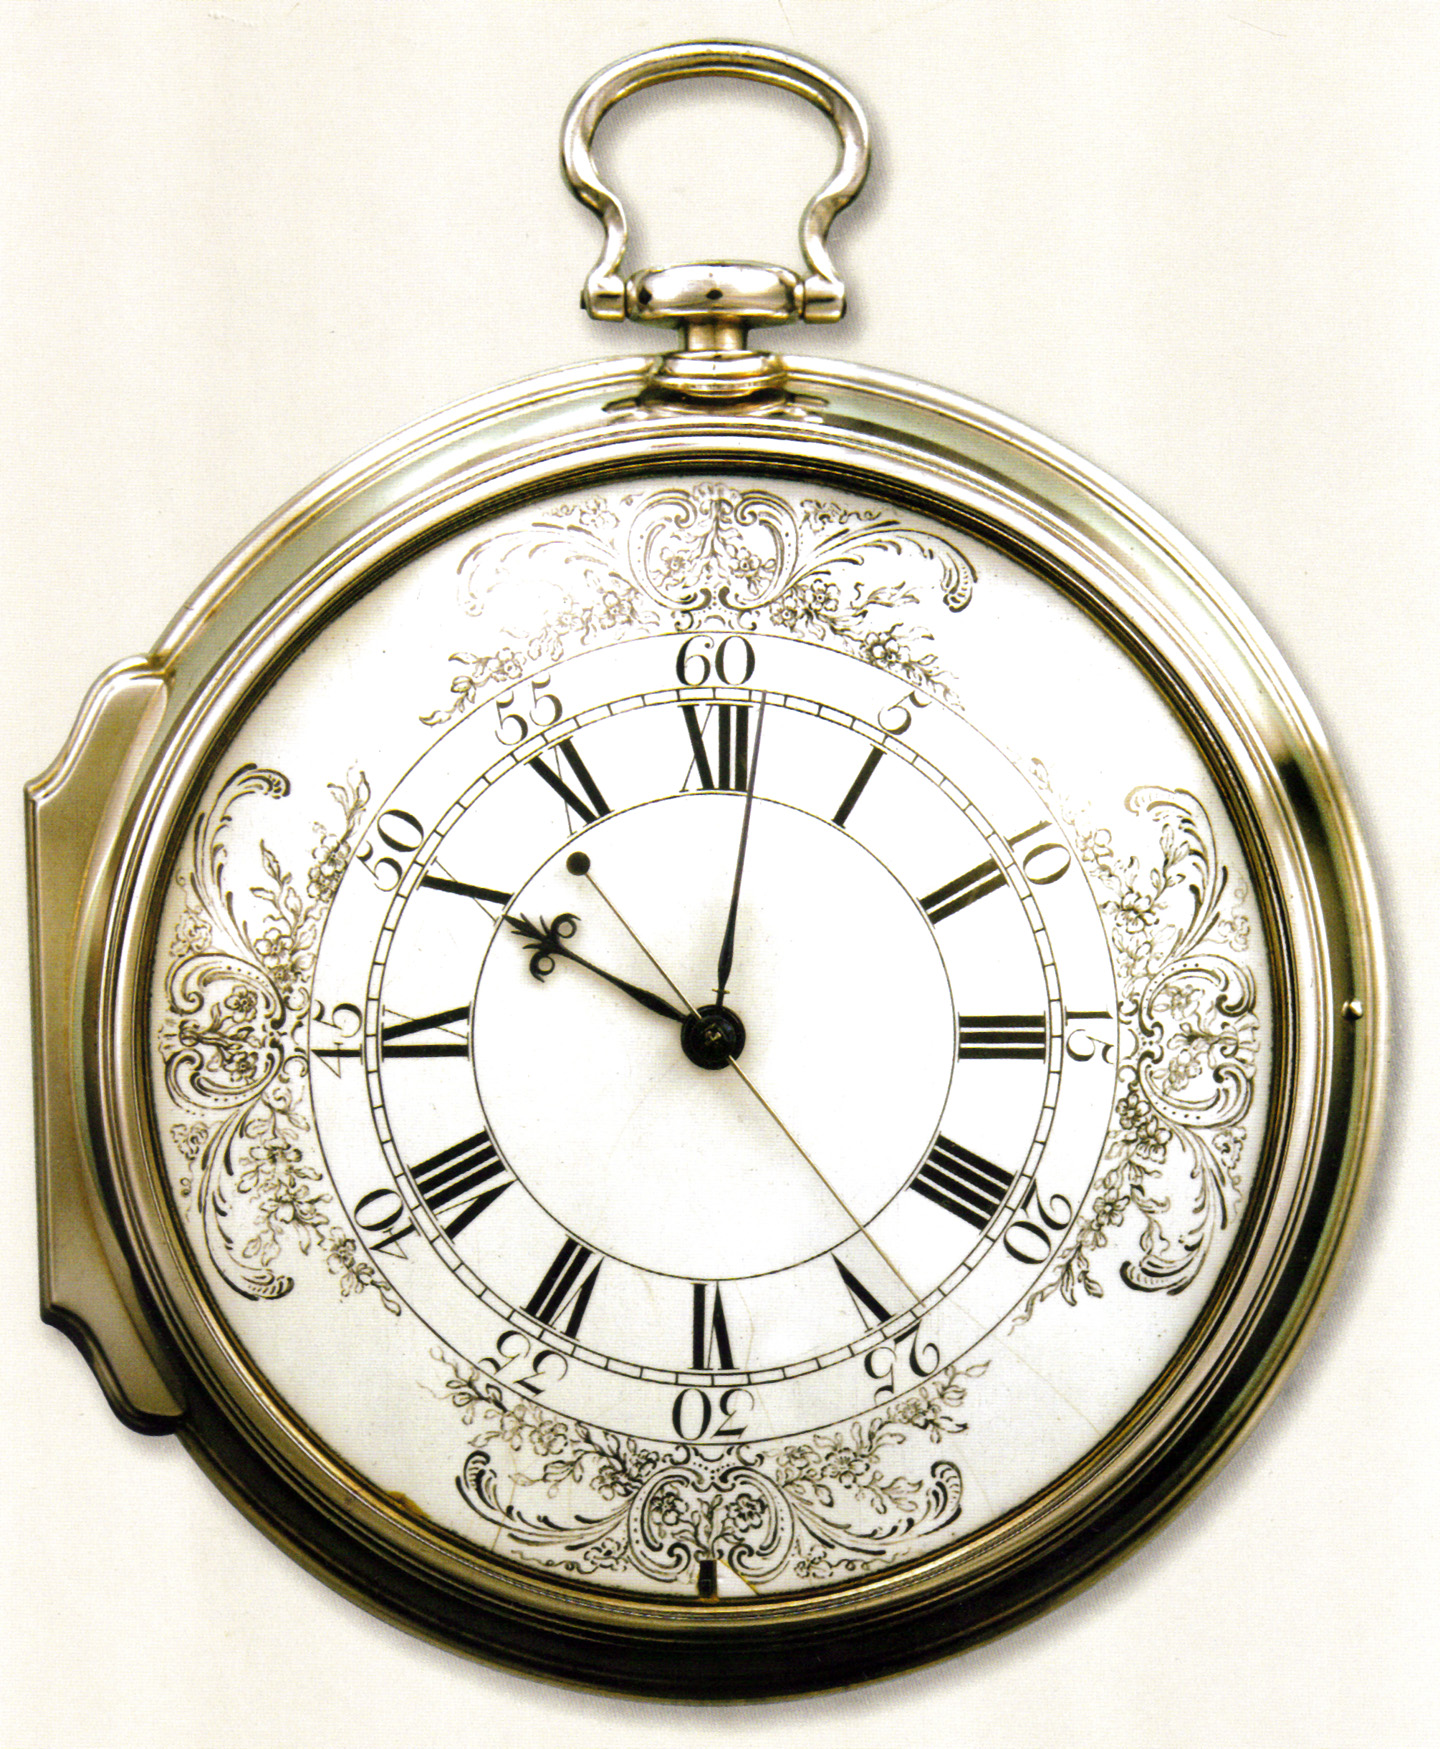 Naval Chronometer History